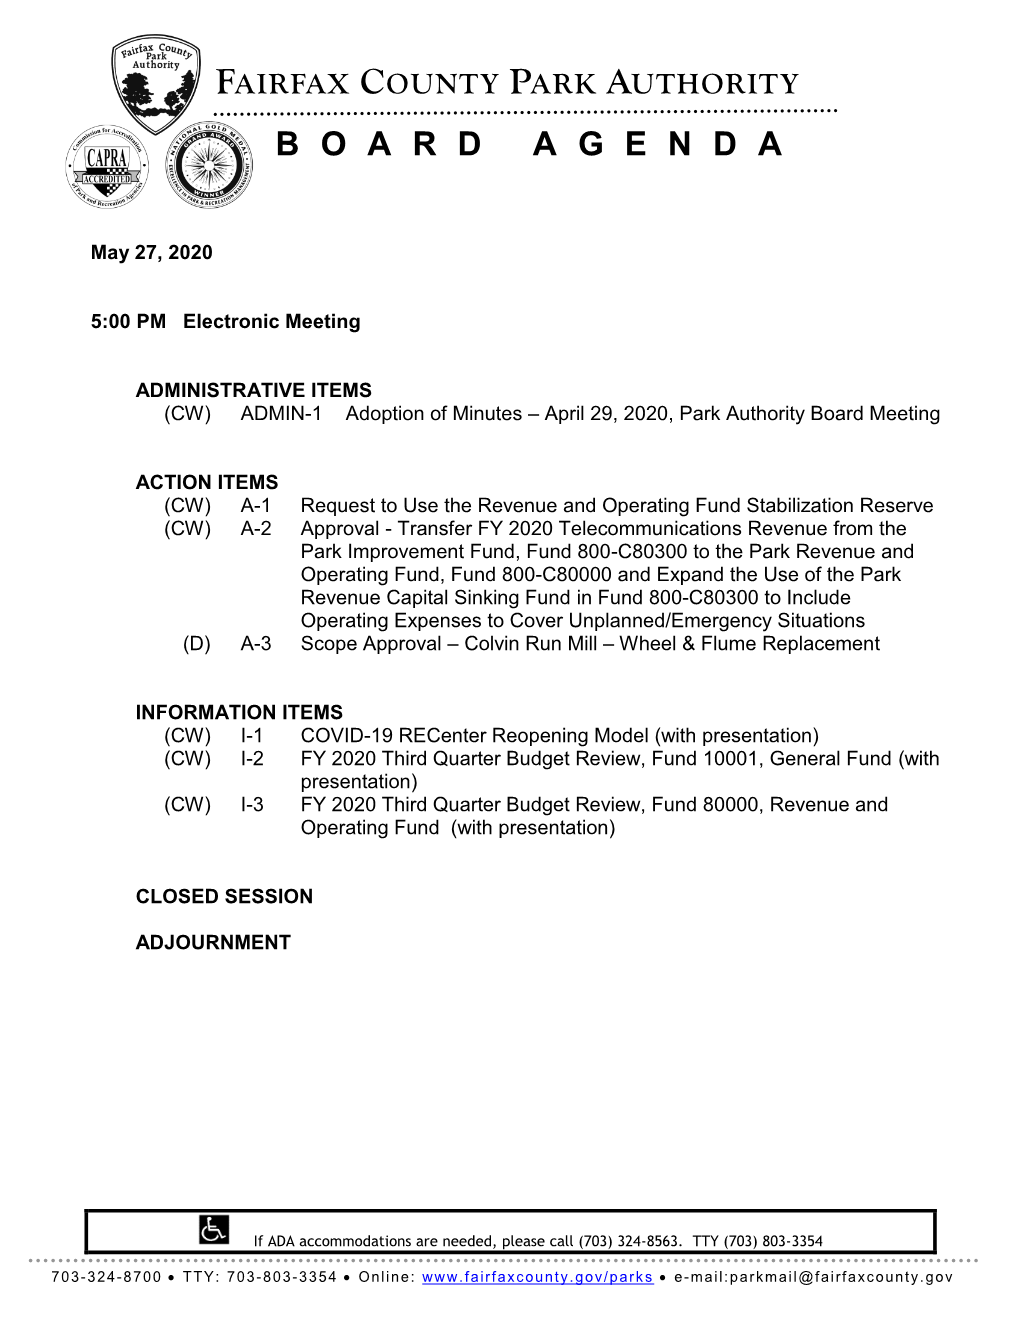 Fairfax County Park Authority Board Agenda